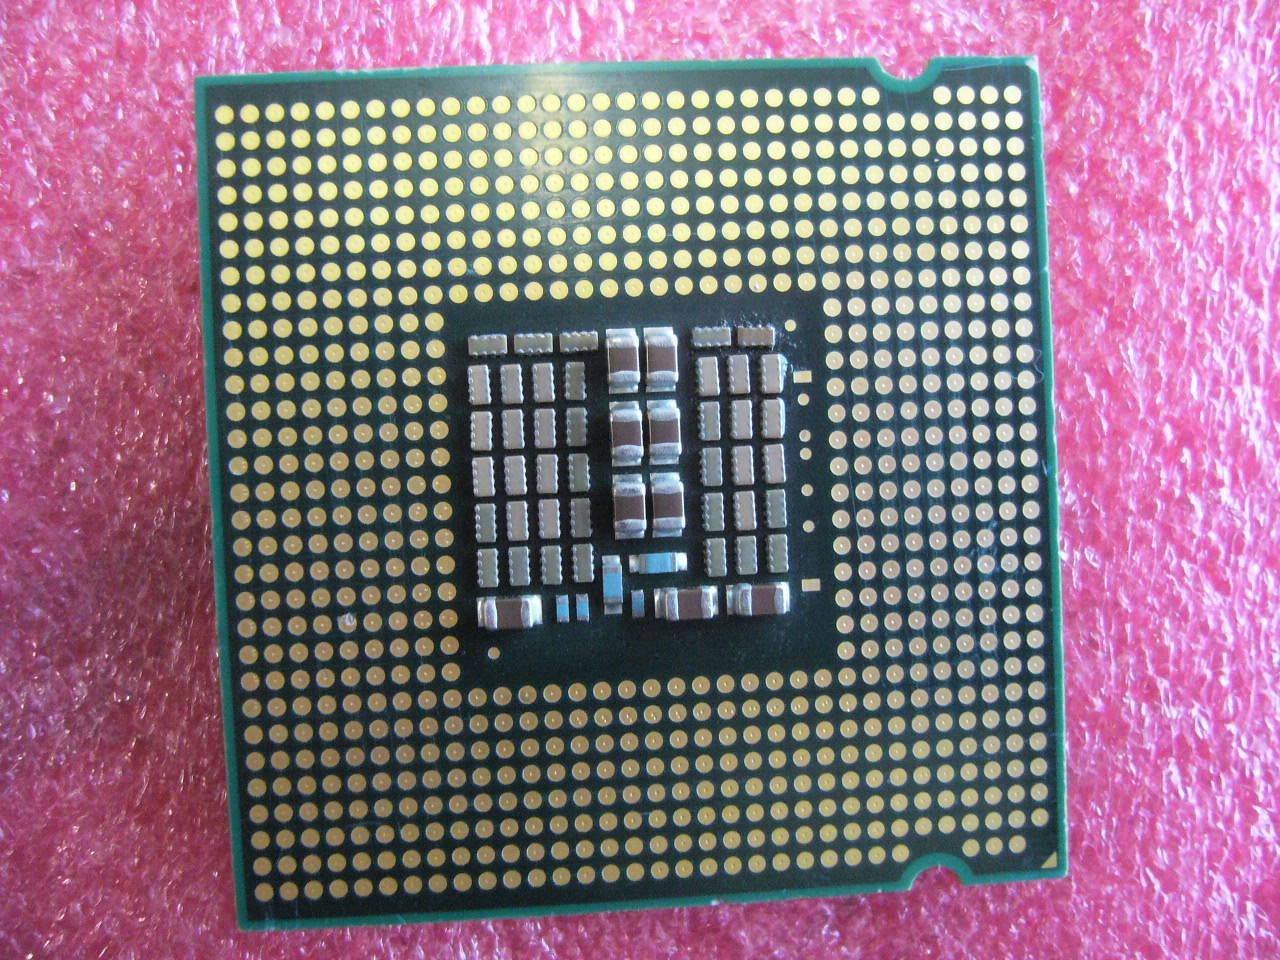 QTY 1x INTEL Quad Cores X3360 CPU 2.83GHz/12MB/1333Mhz LGA775 SLB8X SLAWZ - Click Image to Close